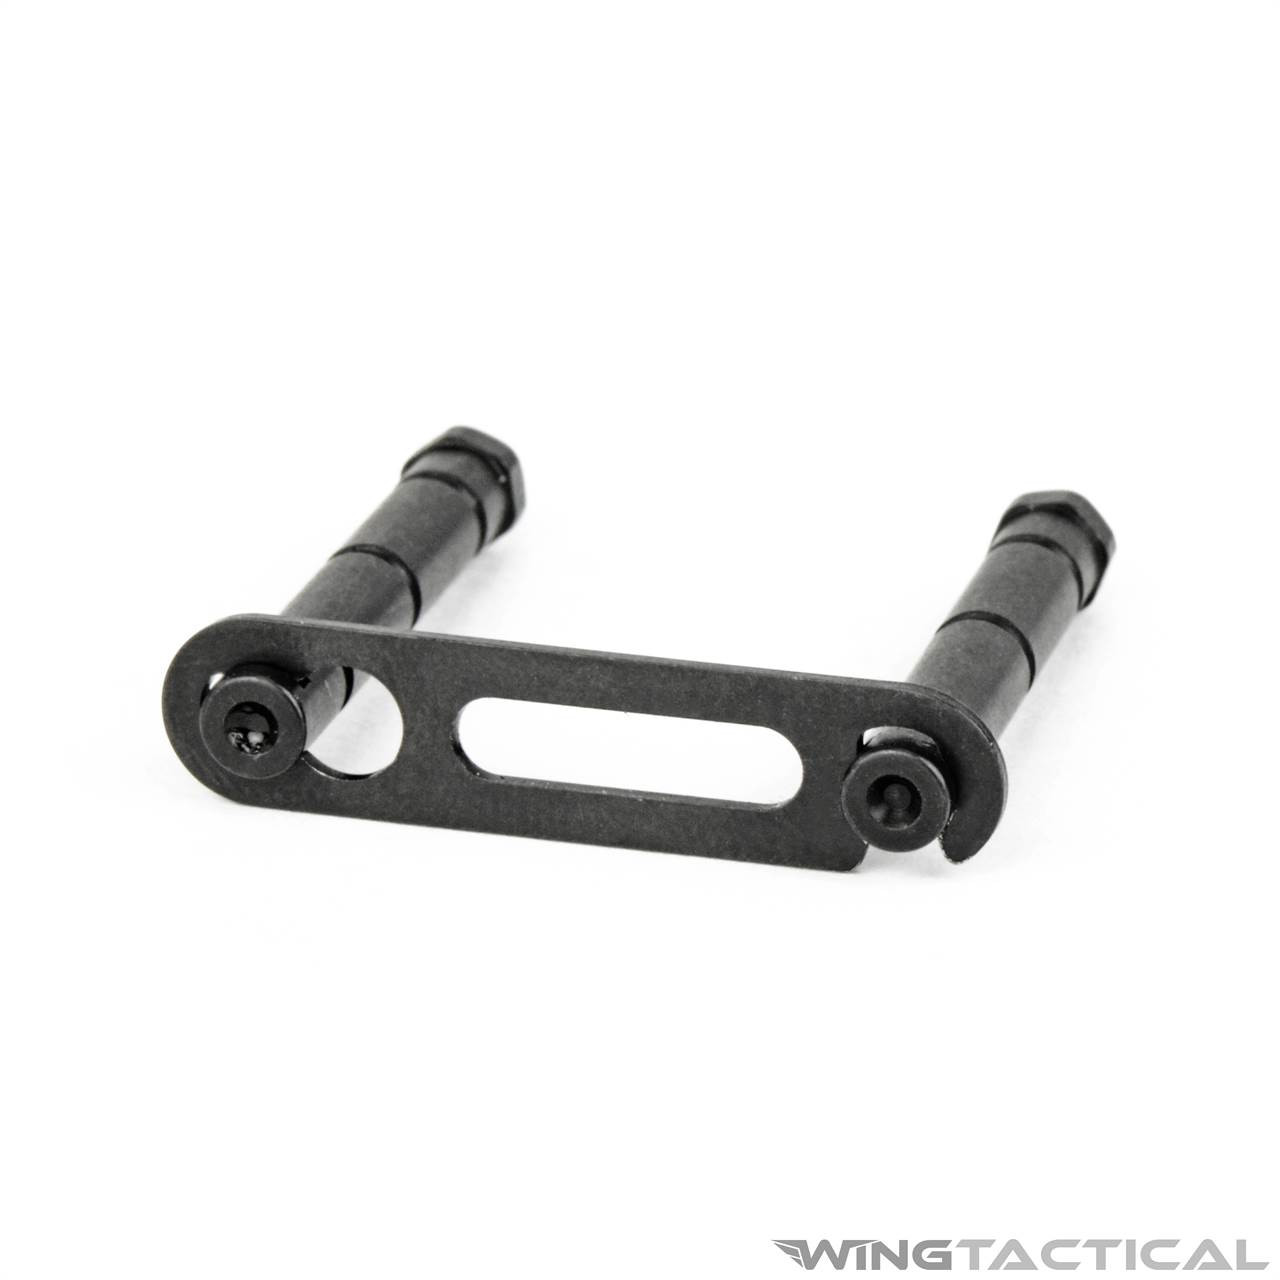 Trigger & Hammer (Anti-Walk) Pin Set - AR15 or AR10/LR308 Stainless